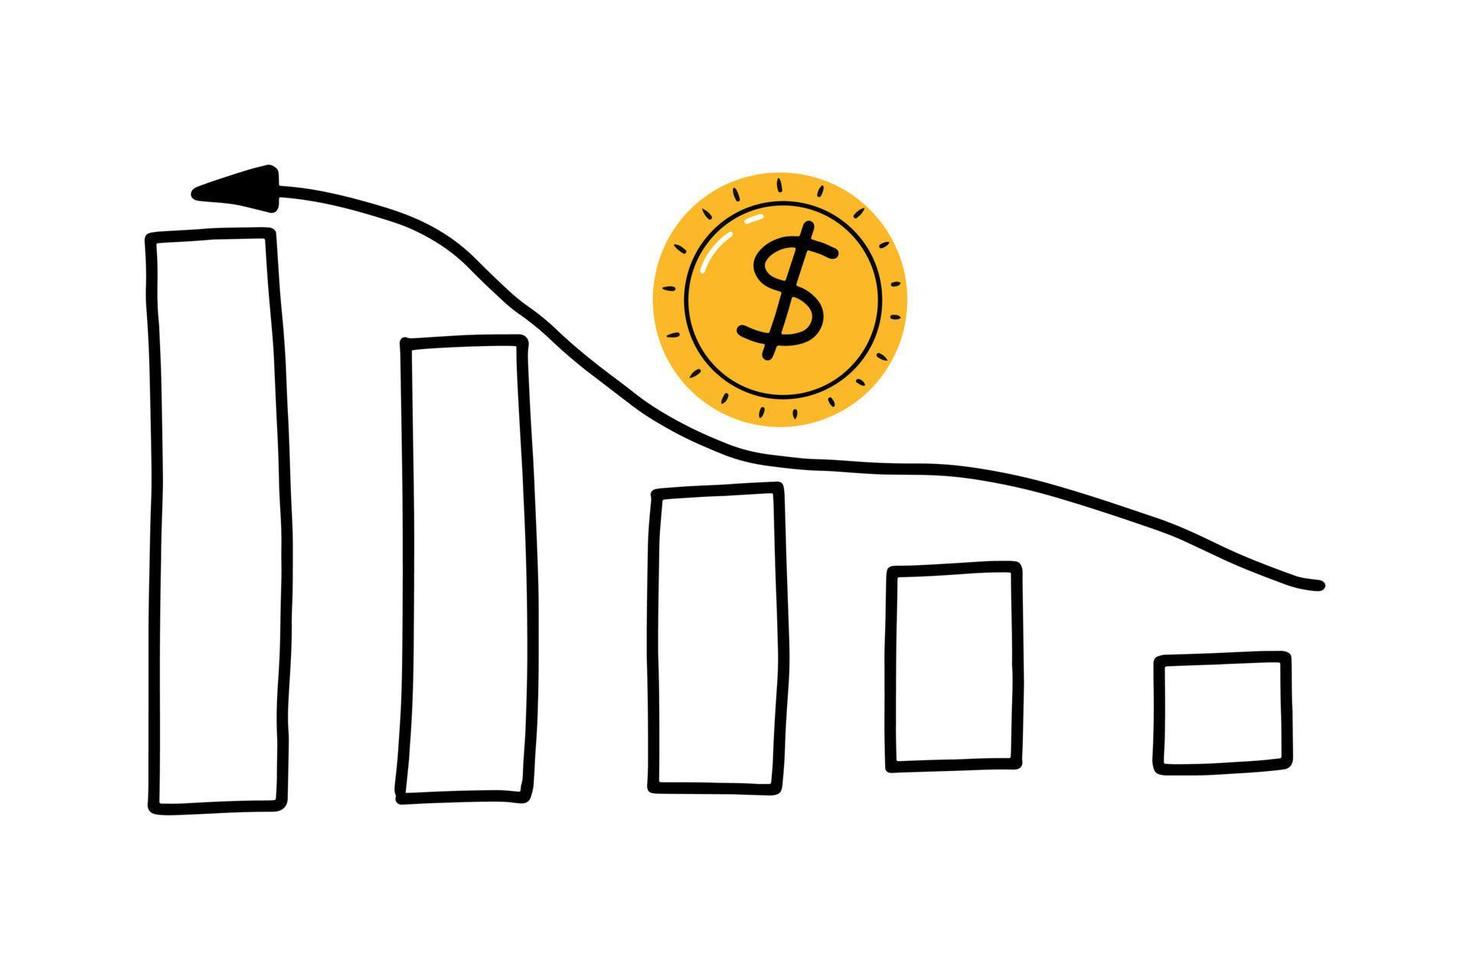 Dollar growth vector illustration. Dollar Growth Chart. Doodle style.